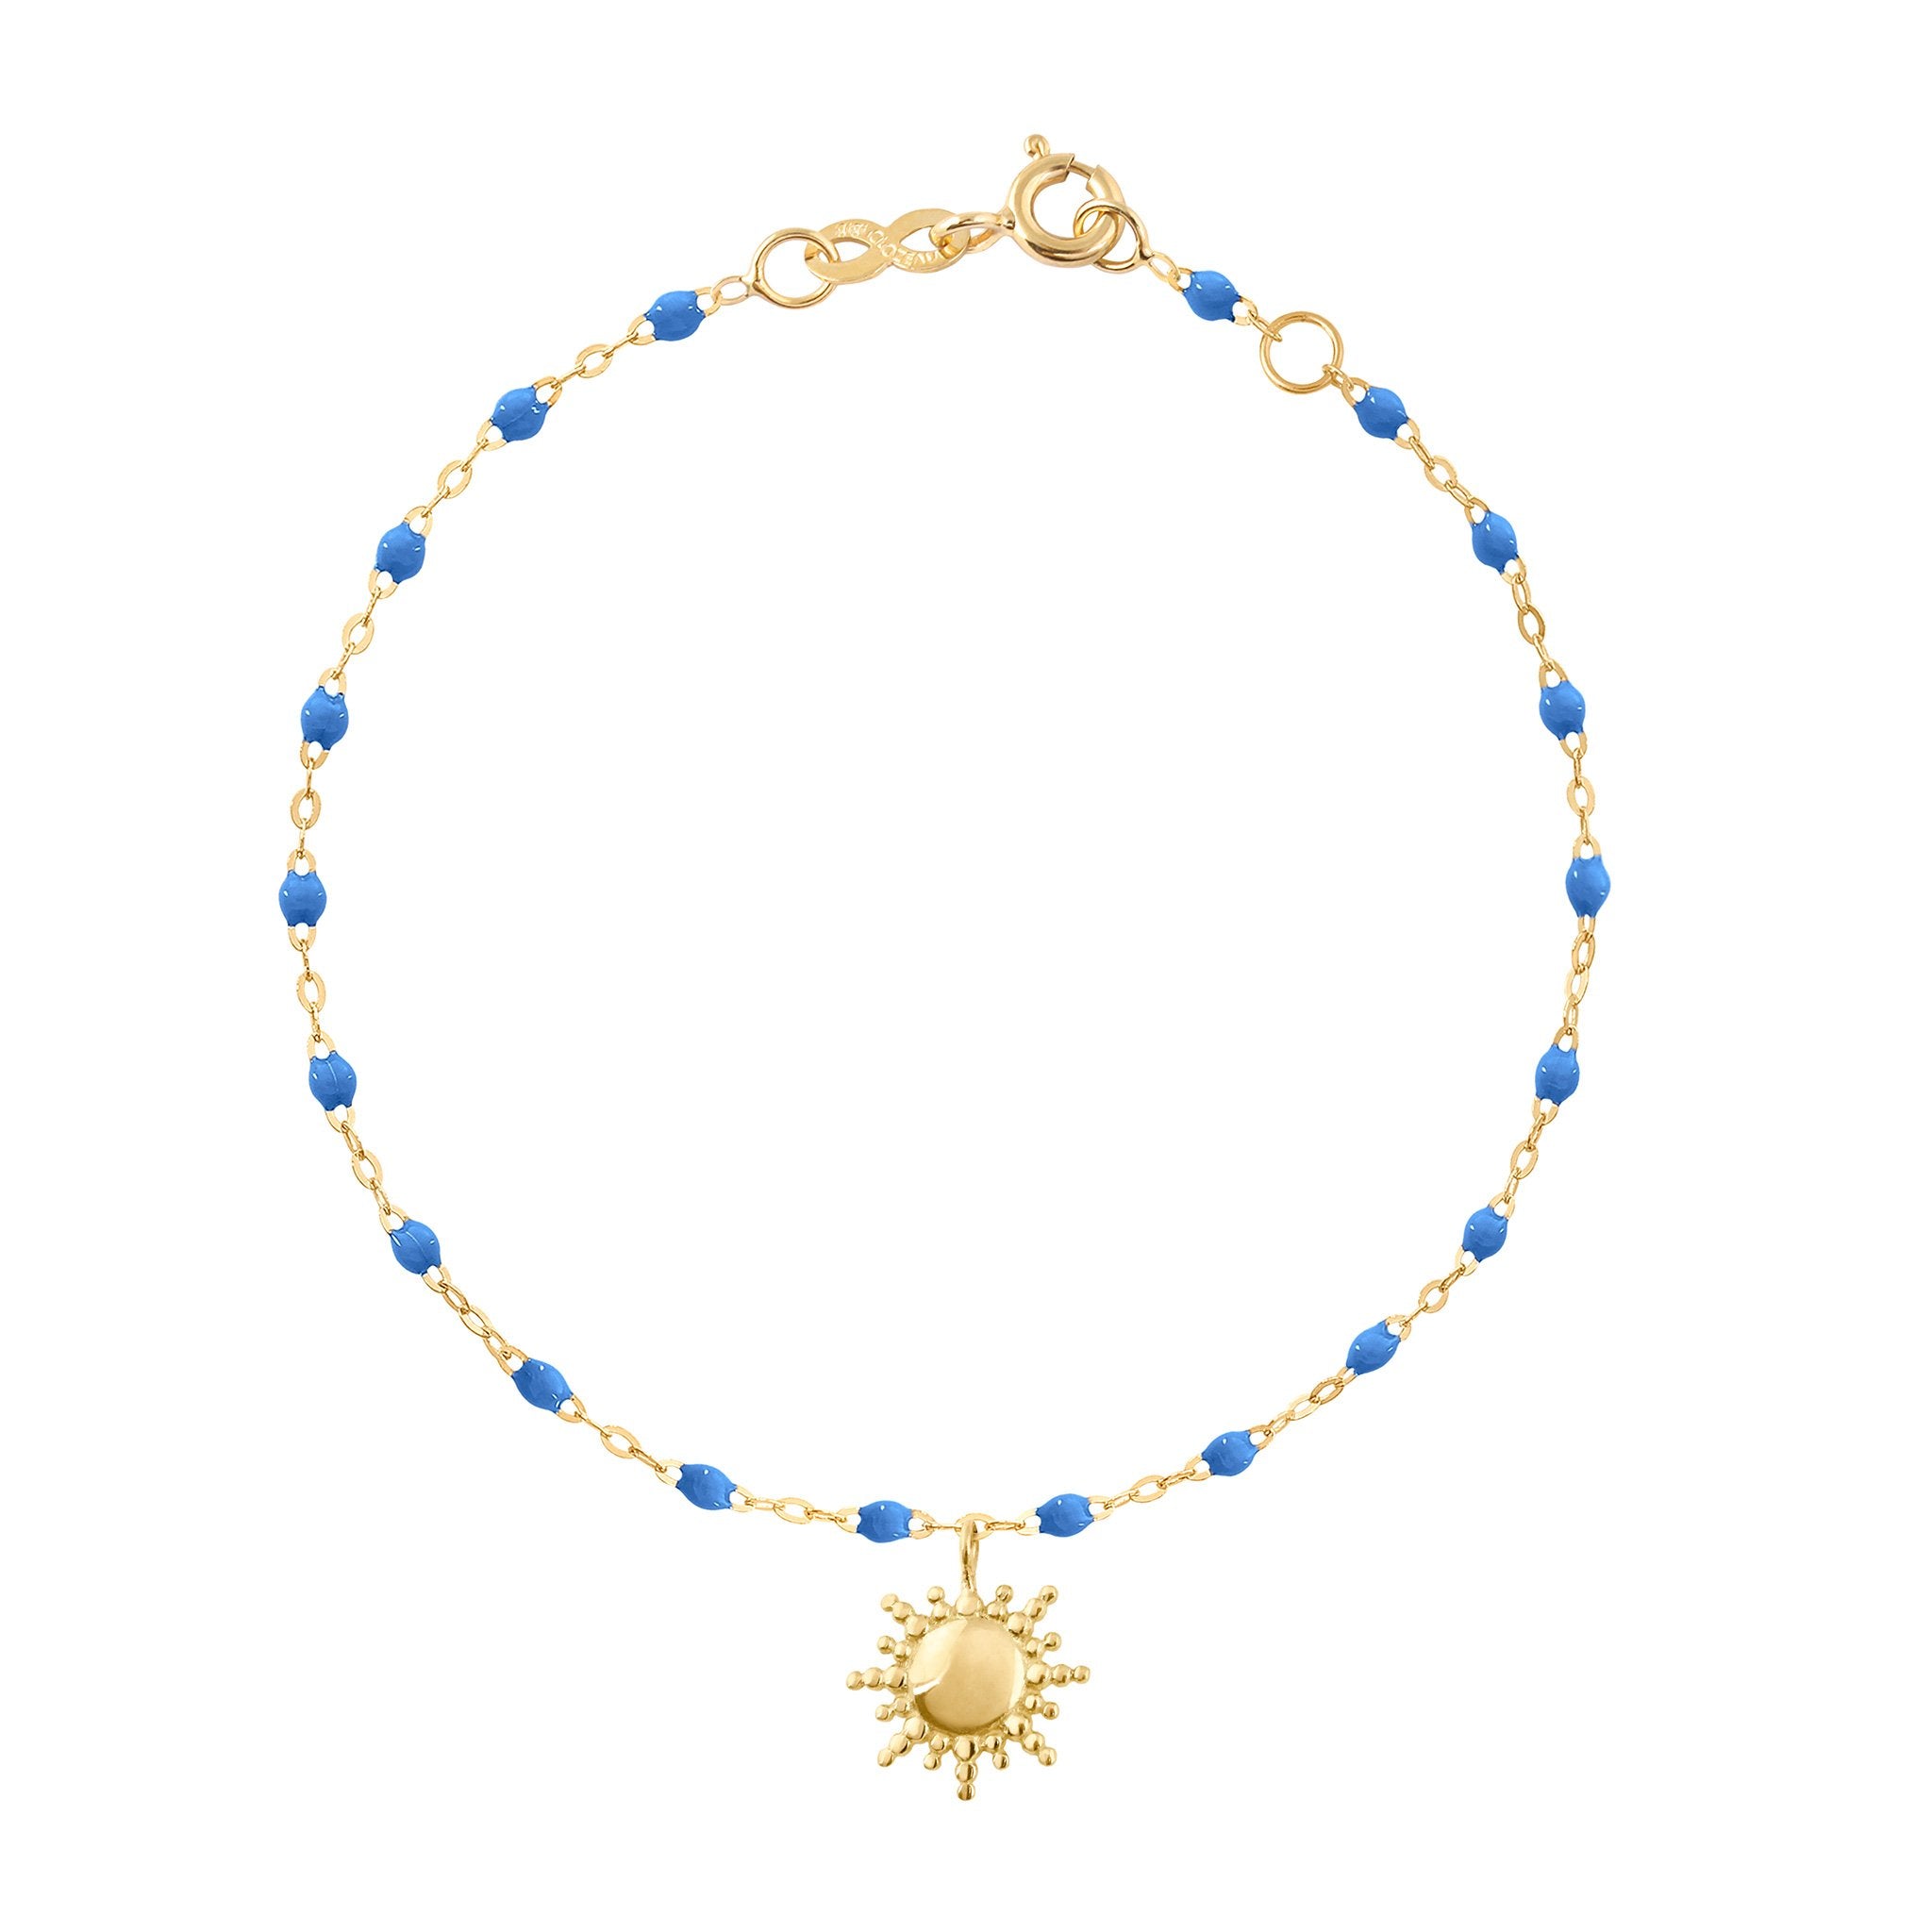 Bracelet bleu fluo Soleil, or jaune, 17 cm pirate Référence :  b3so001j0417xx -1